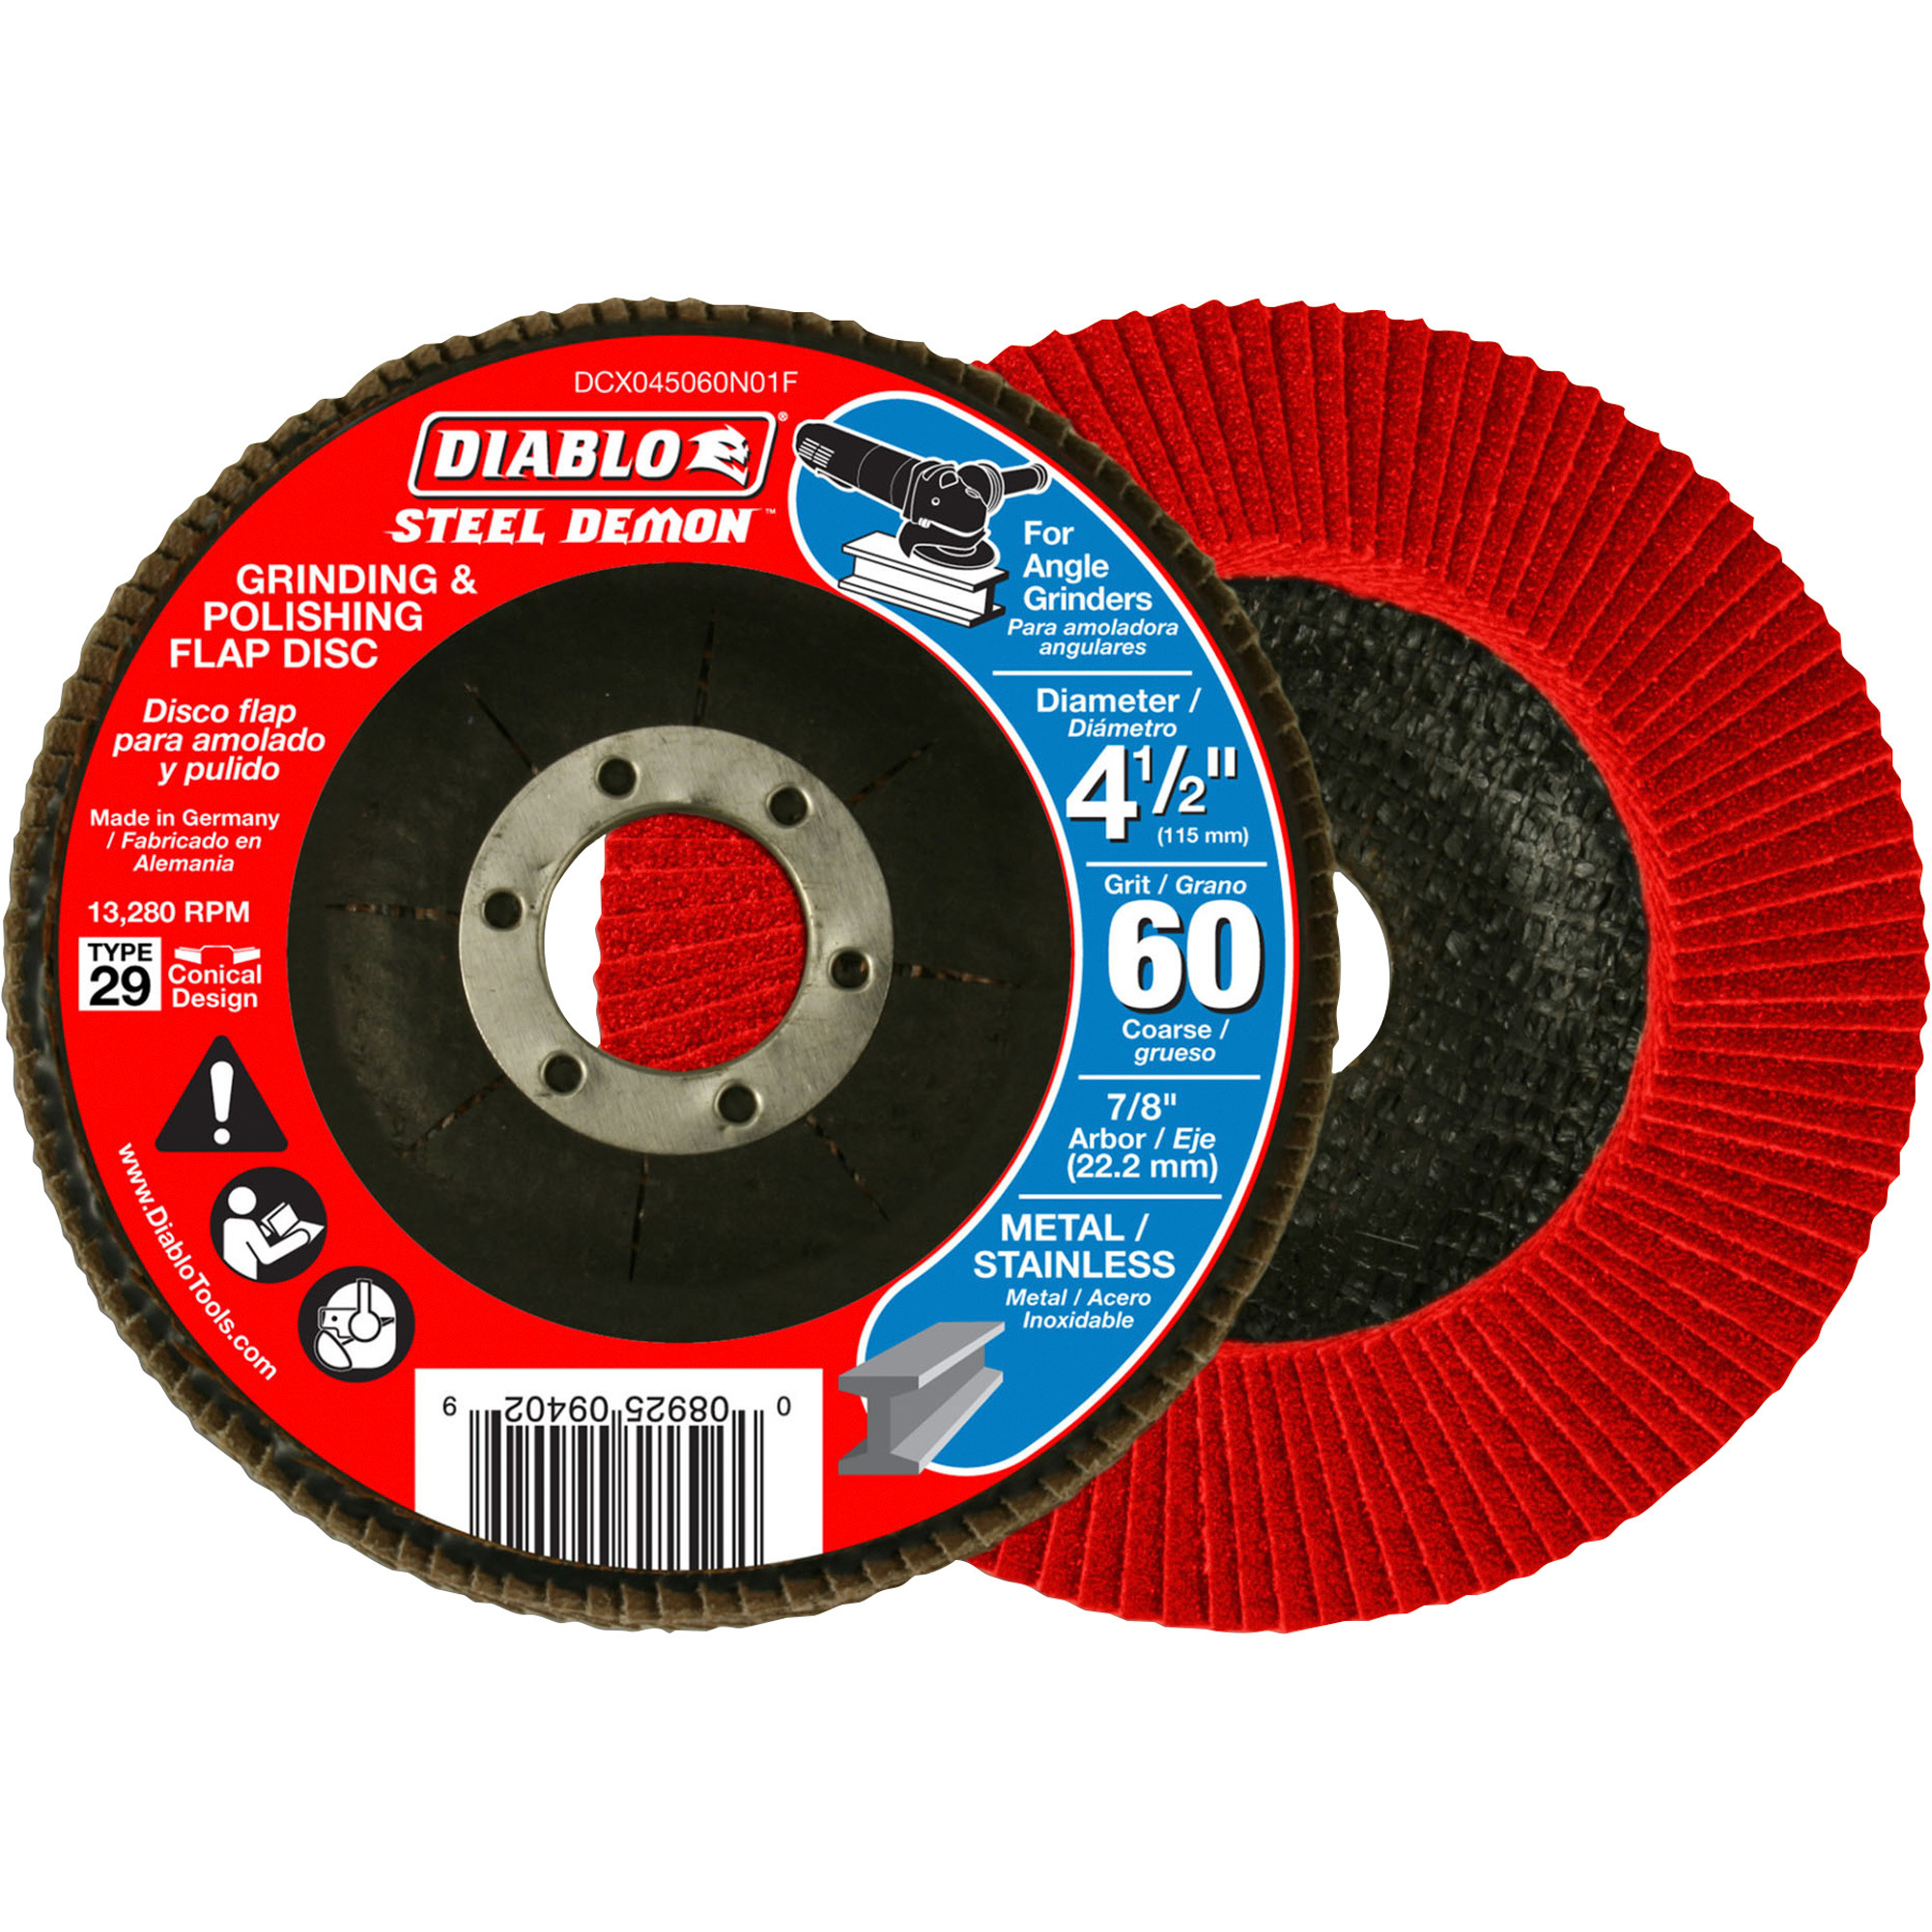 Diablo Steel Demon Flap Disc, 5-Pack, 4 1/2Inch, 60 Grit Conical, No Hub, Model DCX045060N05F